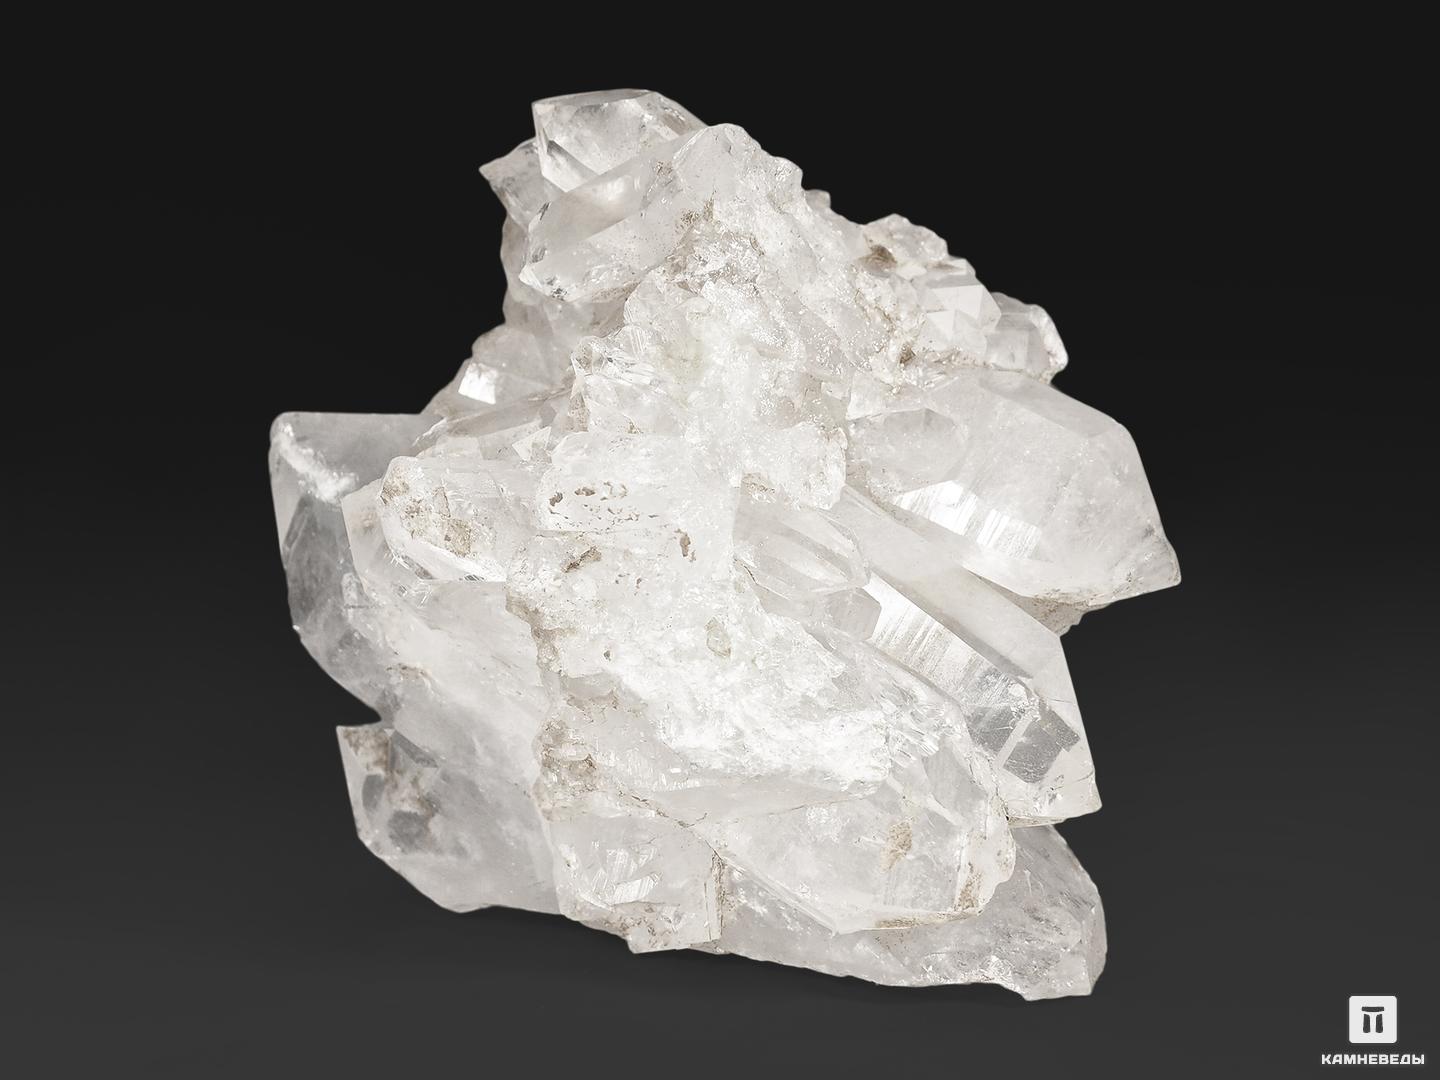 Crystal 9. Quartz cristallo ntrecnfh. Плт9 Кристалл.